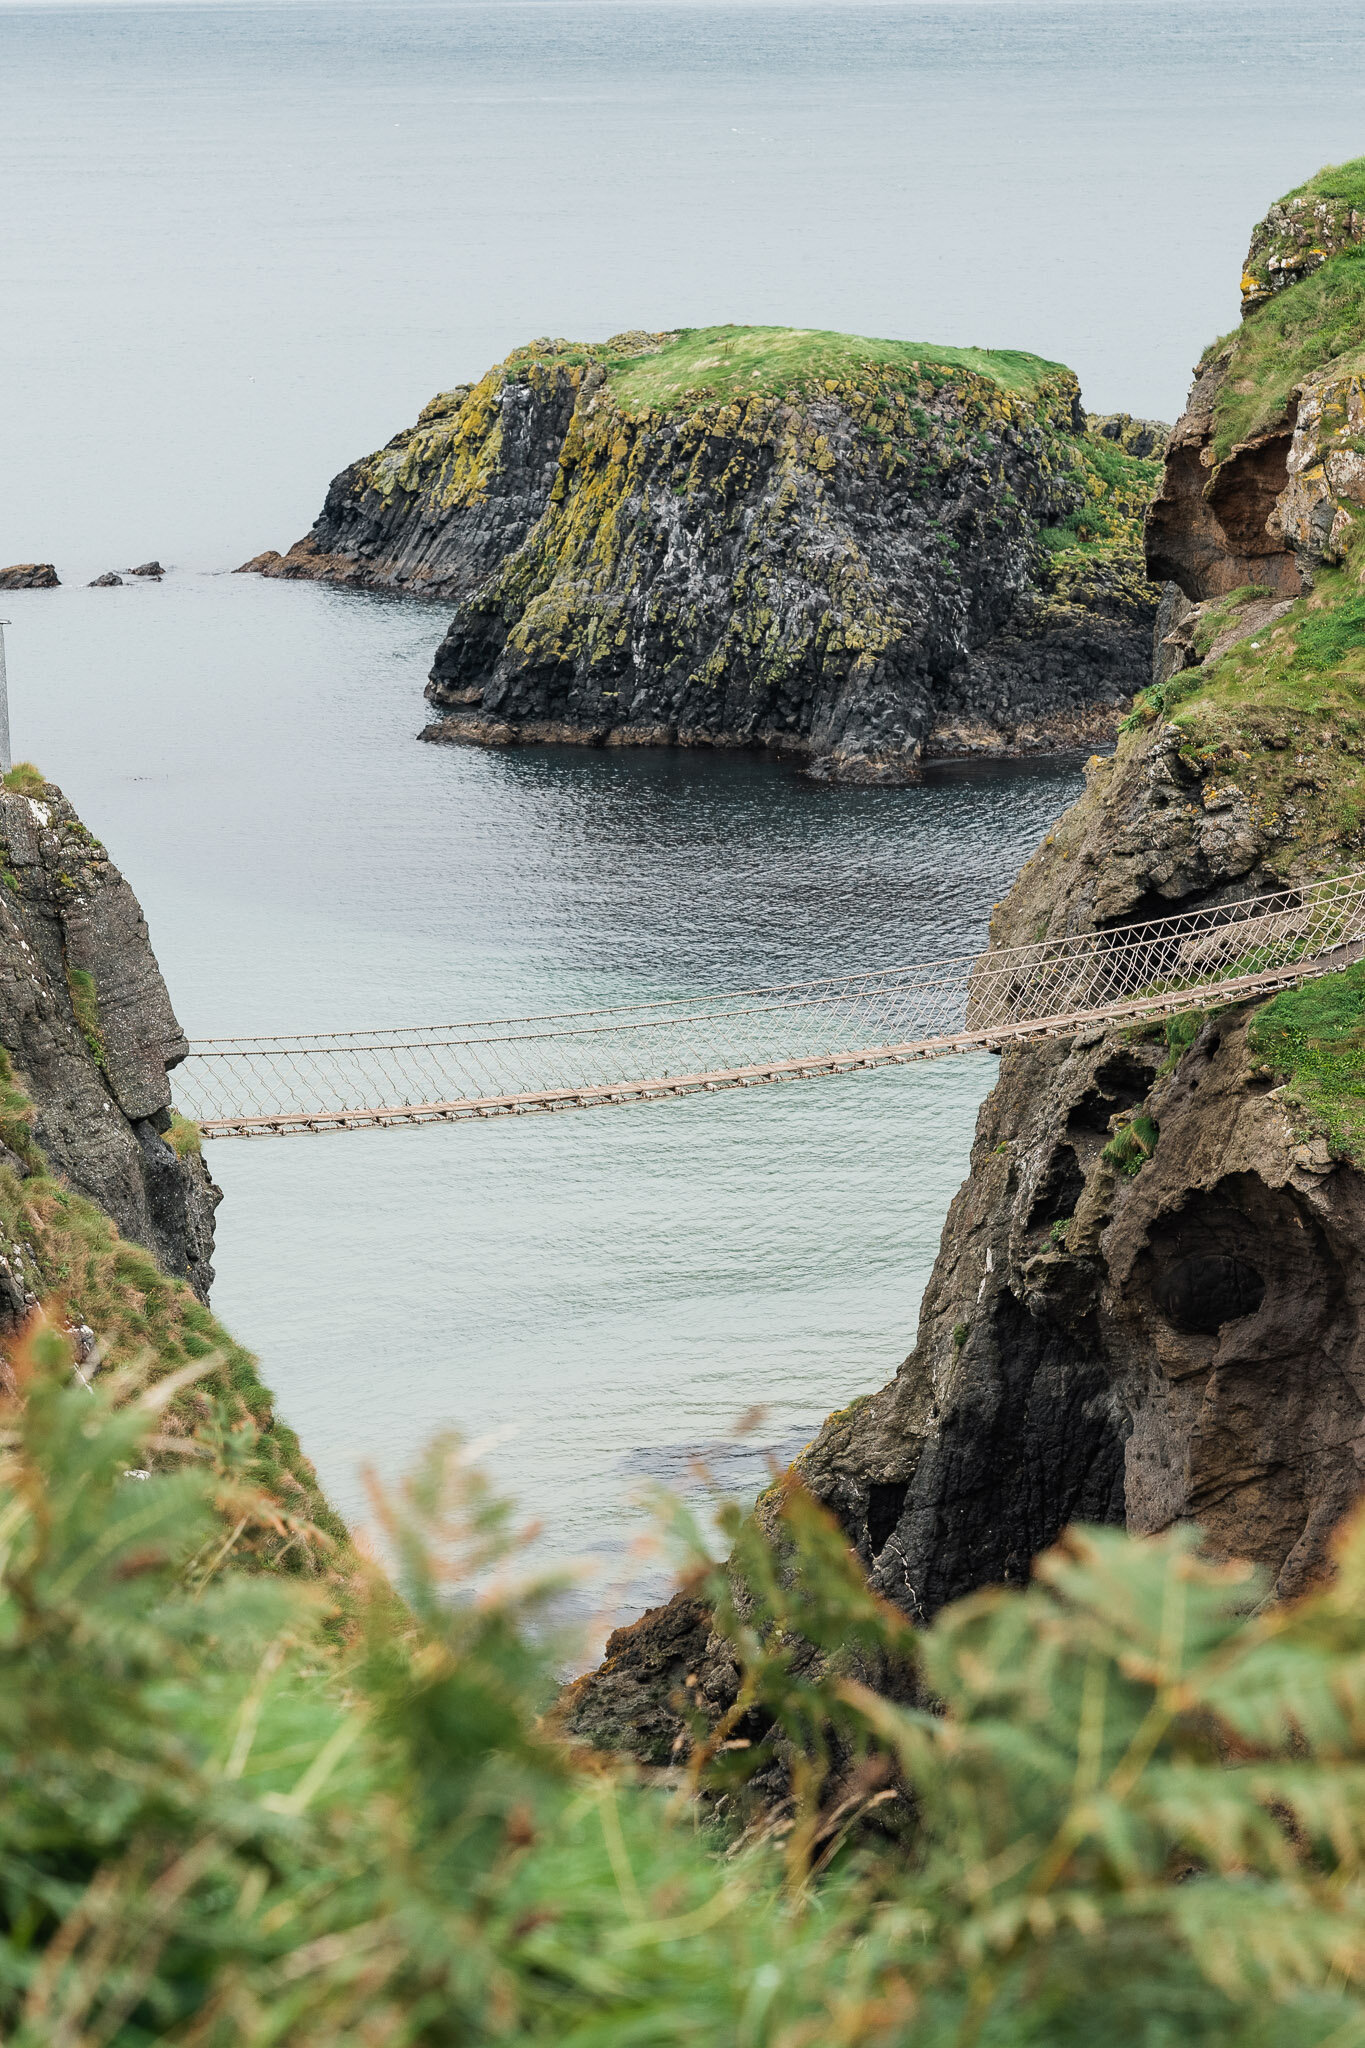 Alex-MJ-On-The-GO-Irlande-Carrick-a-rede-rope-bridge-pont-corde.jpg